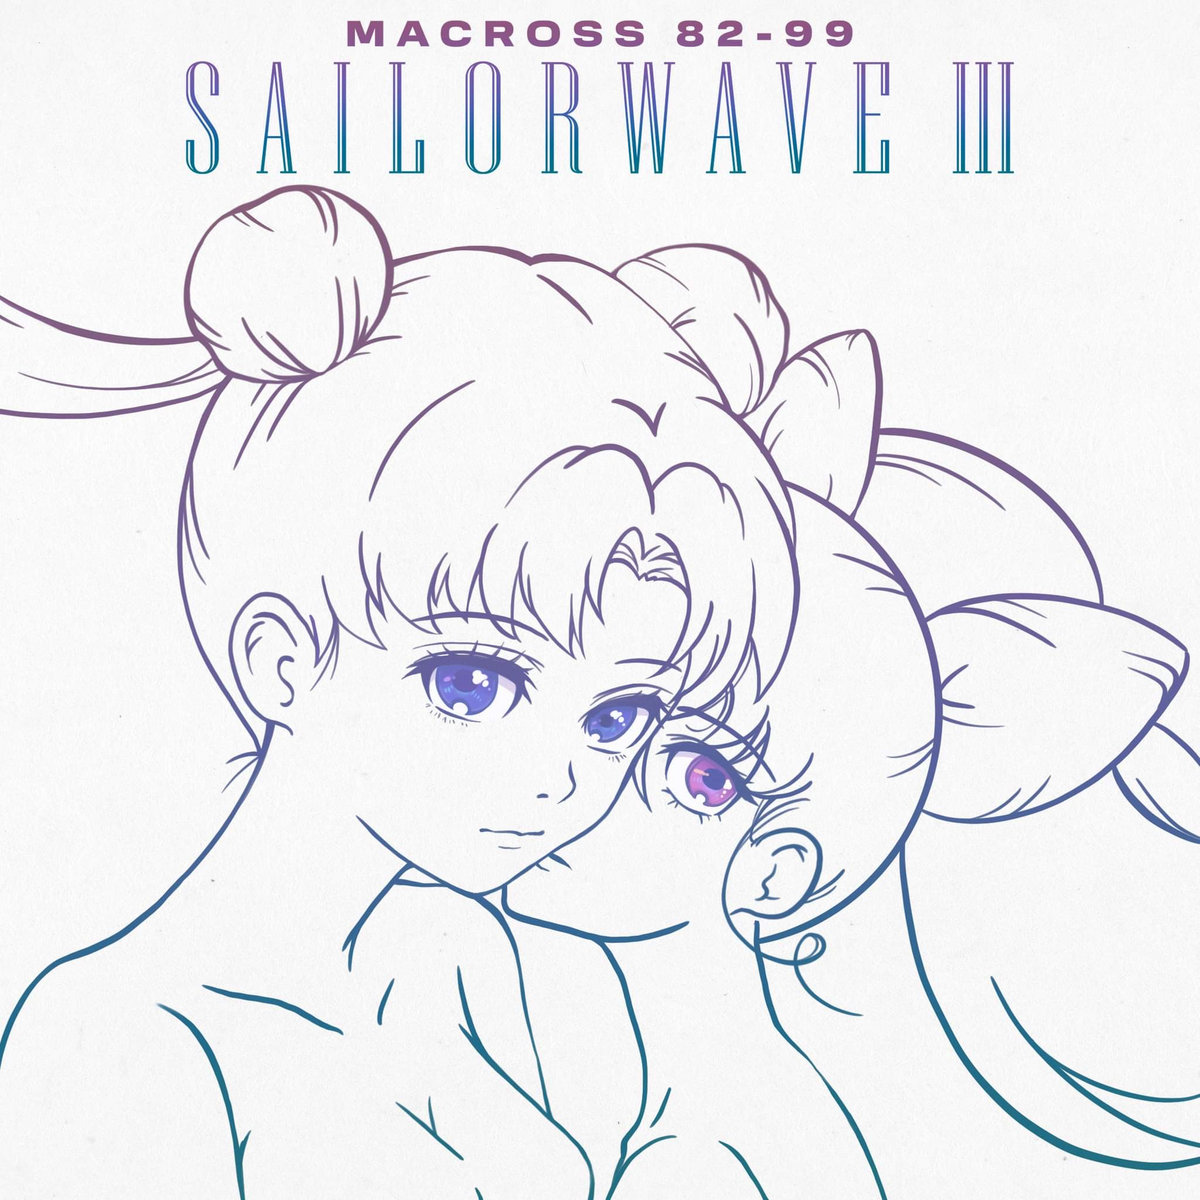 a3991580662 10 - Macross 82-99 marks magical return with Sailorwave III